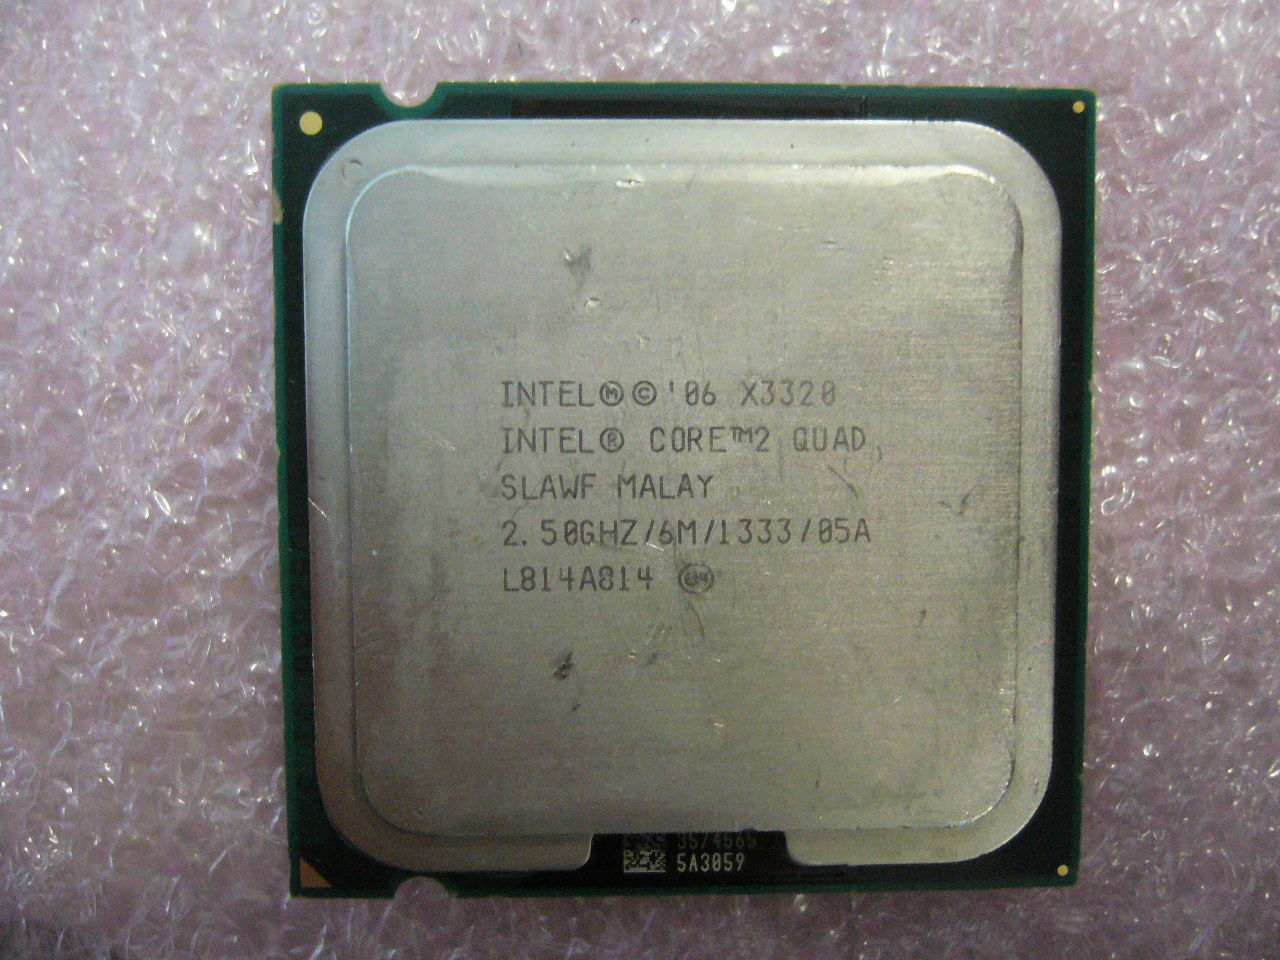 QTY 1x INTEL Quad Cores X3320 CPU 2.50GHz/6MB/1333Mhz LGA775 SLAWF